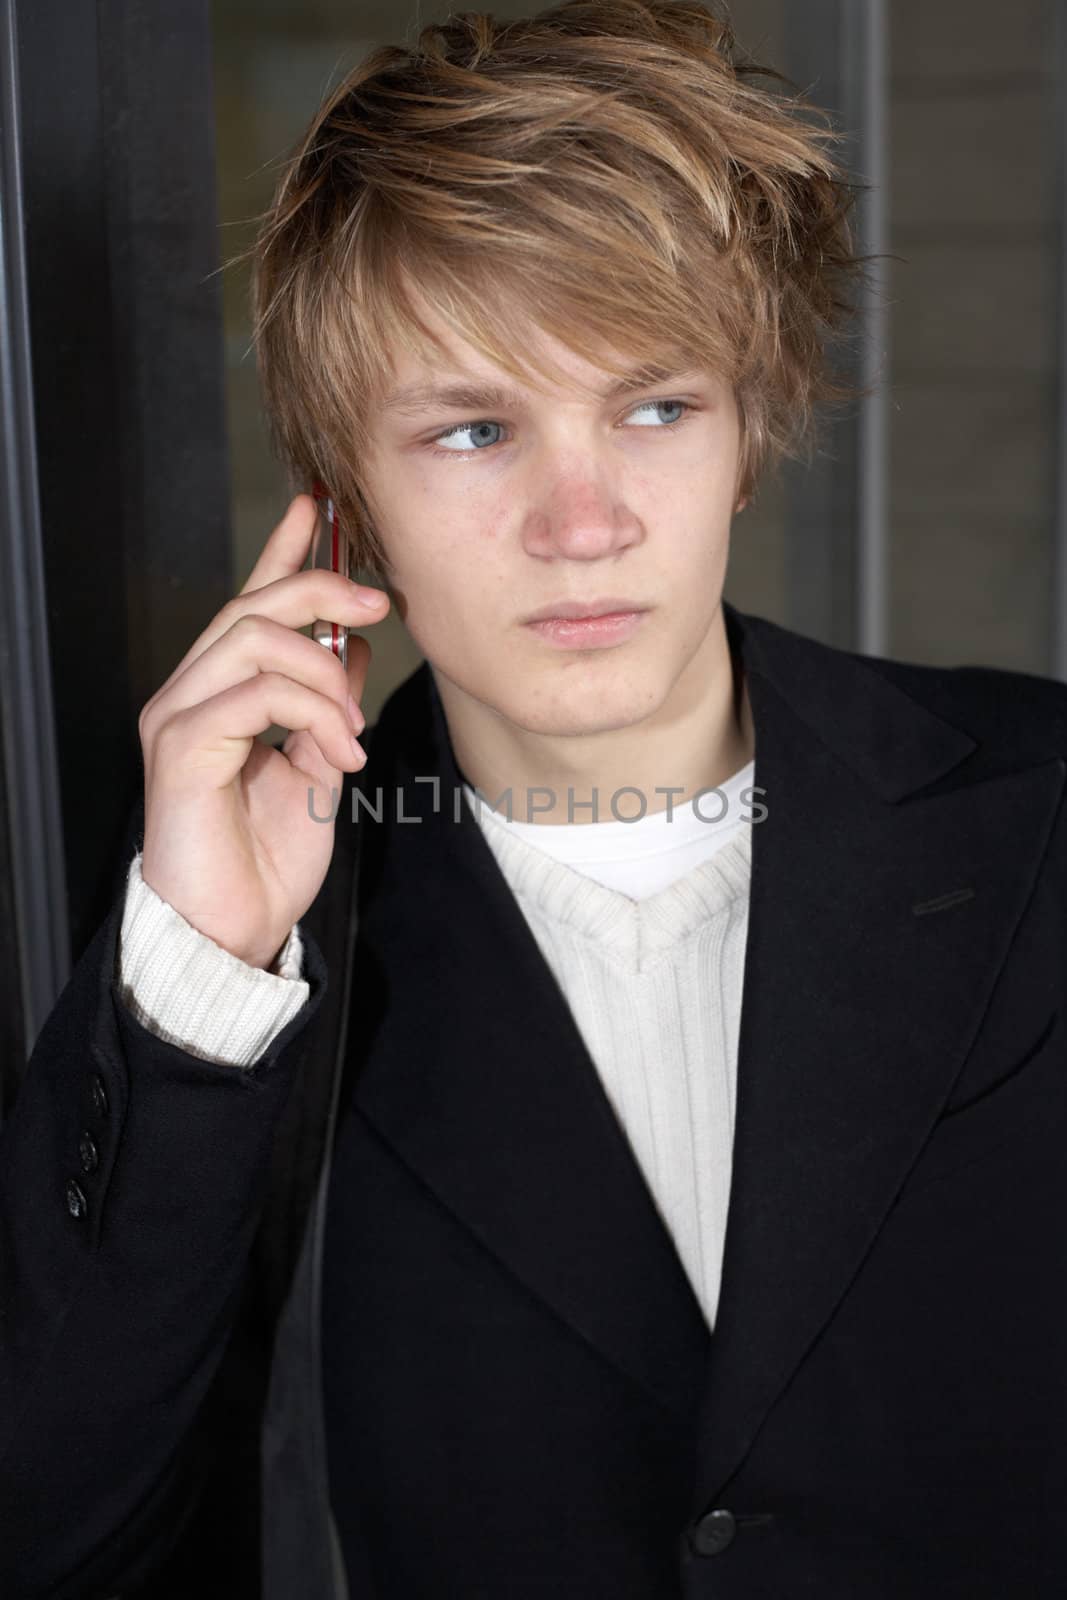 Teenage boy using mobile phone outside modern building